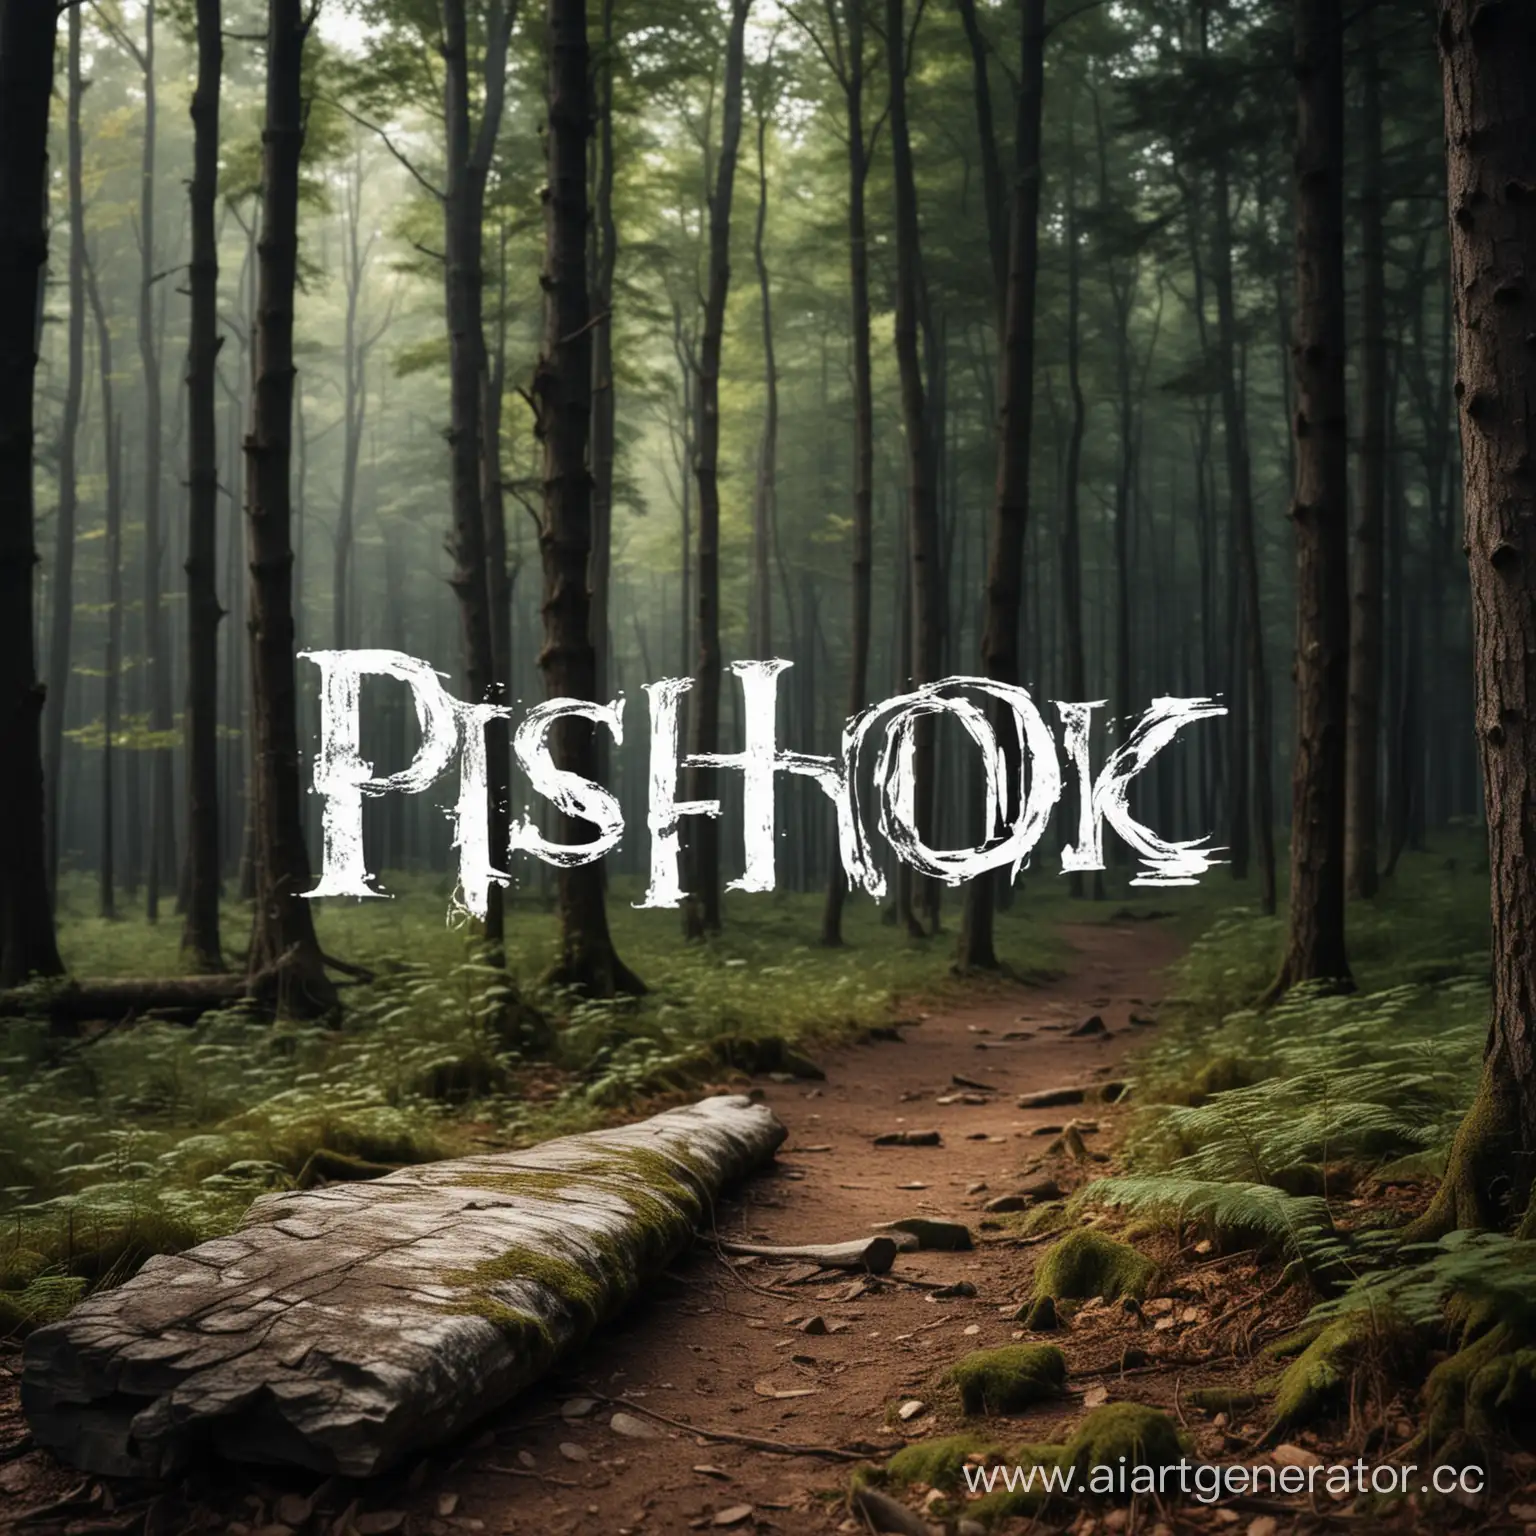 Mystical-Inscription-PSIHOZ-in-an-Enchanting-Dark-Forest